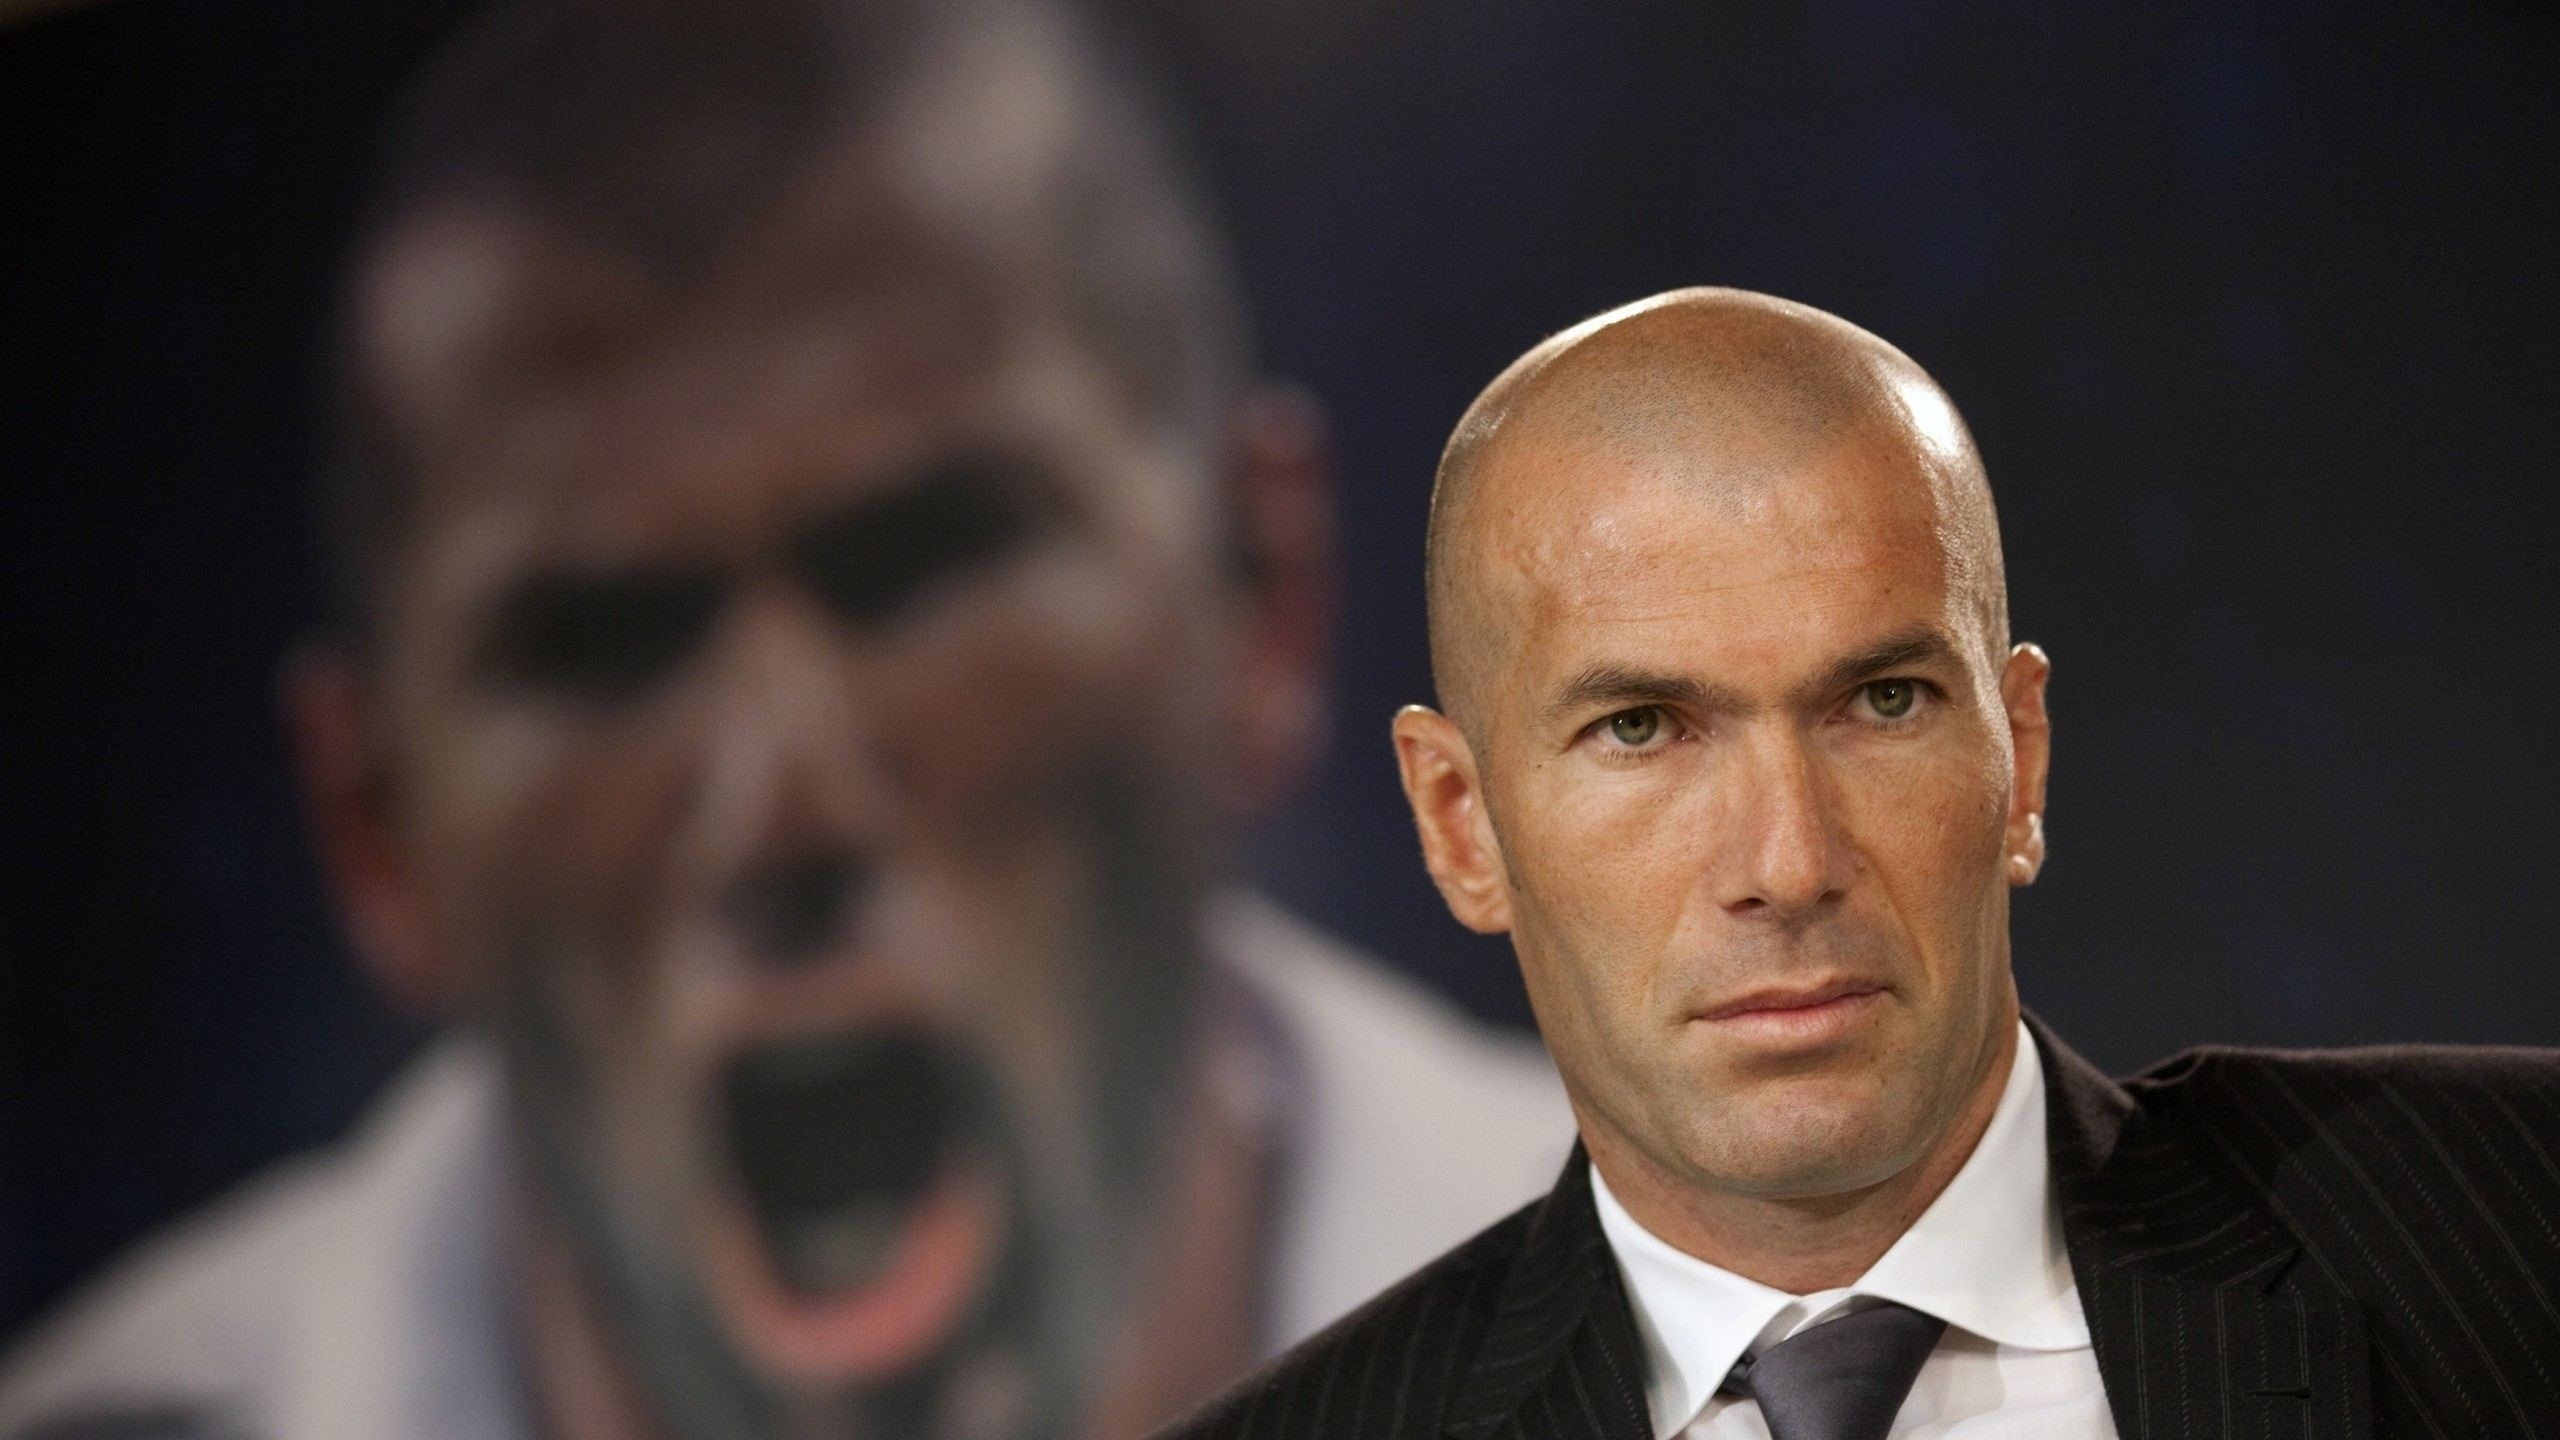 Zinedine Zidane for 2560x1440 HDTV resolution